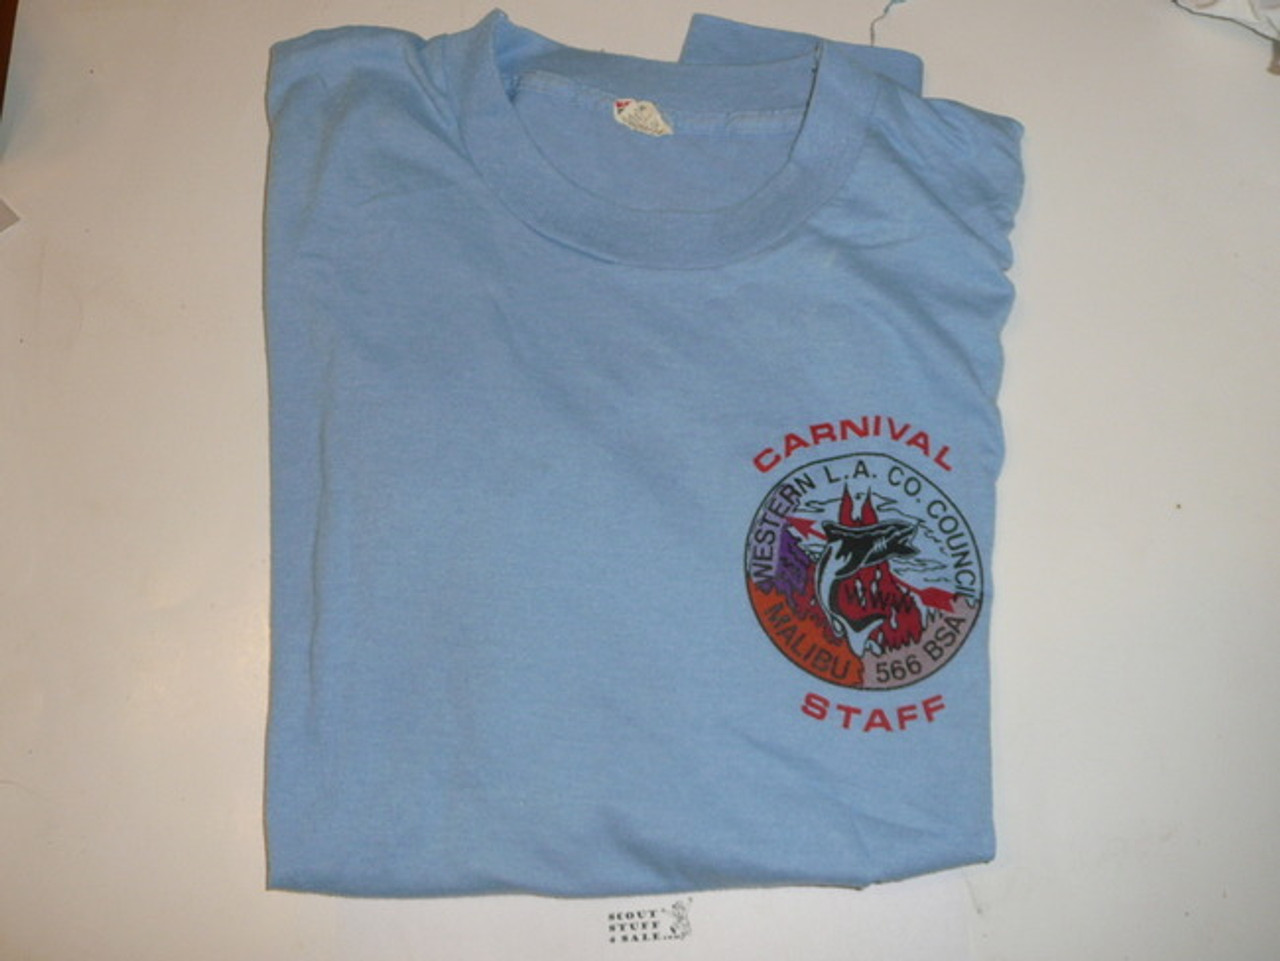 Order of the Arrow Lodge #566 Malibu 1980's Carnival STAFF Tee Shirt, Mens Large